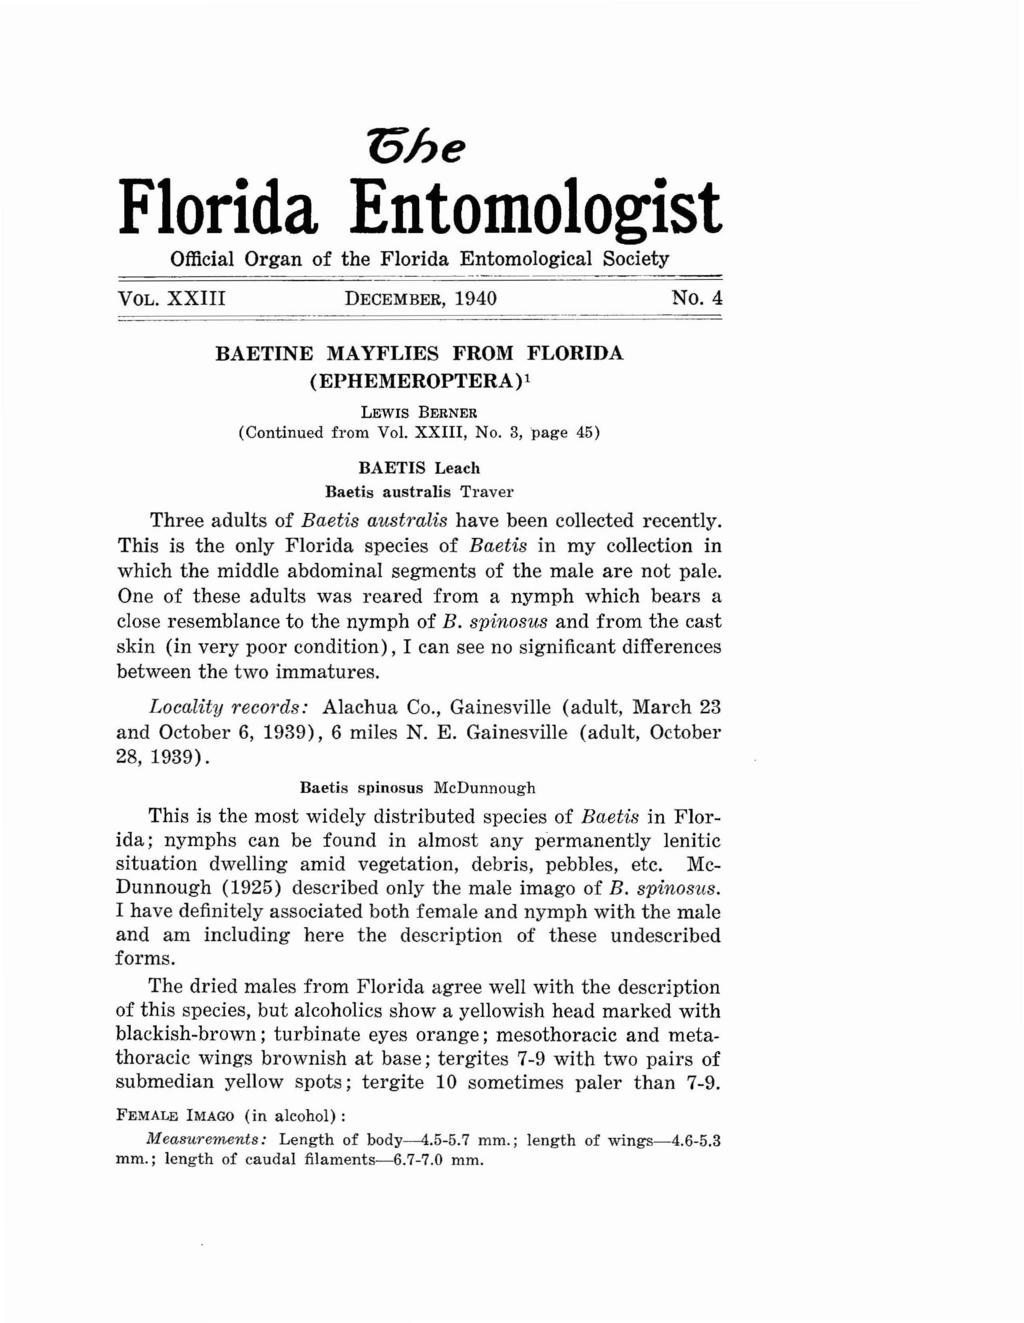 75he Florida Entomologist Official Organ of the Florida Entomological Society VOL. XXIII DECEMBER, 1940 NO.4 BAETINE MAYFLIES FROM FLORIDA (EPHEMEROPTERA)l LEWIS BERNER (Continued from VoL XXIII, No.